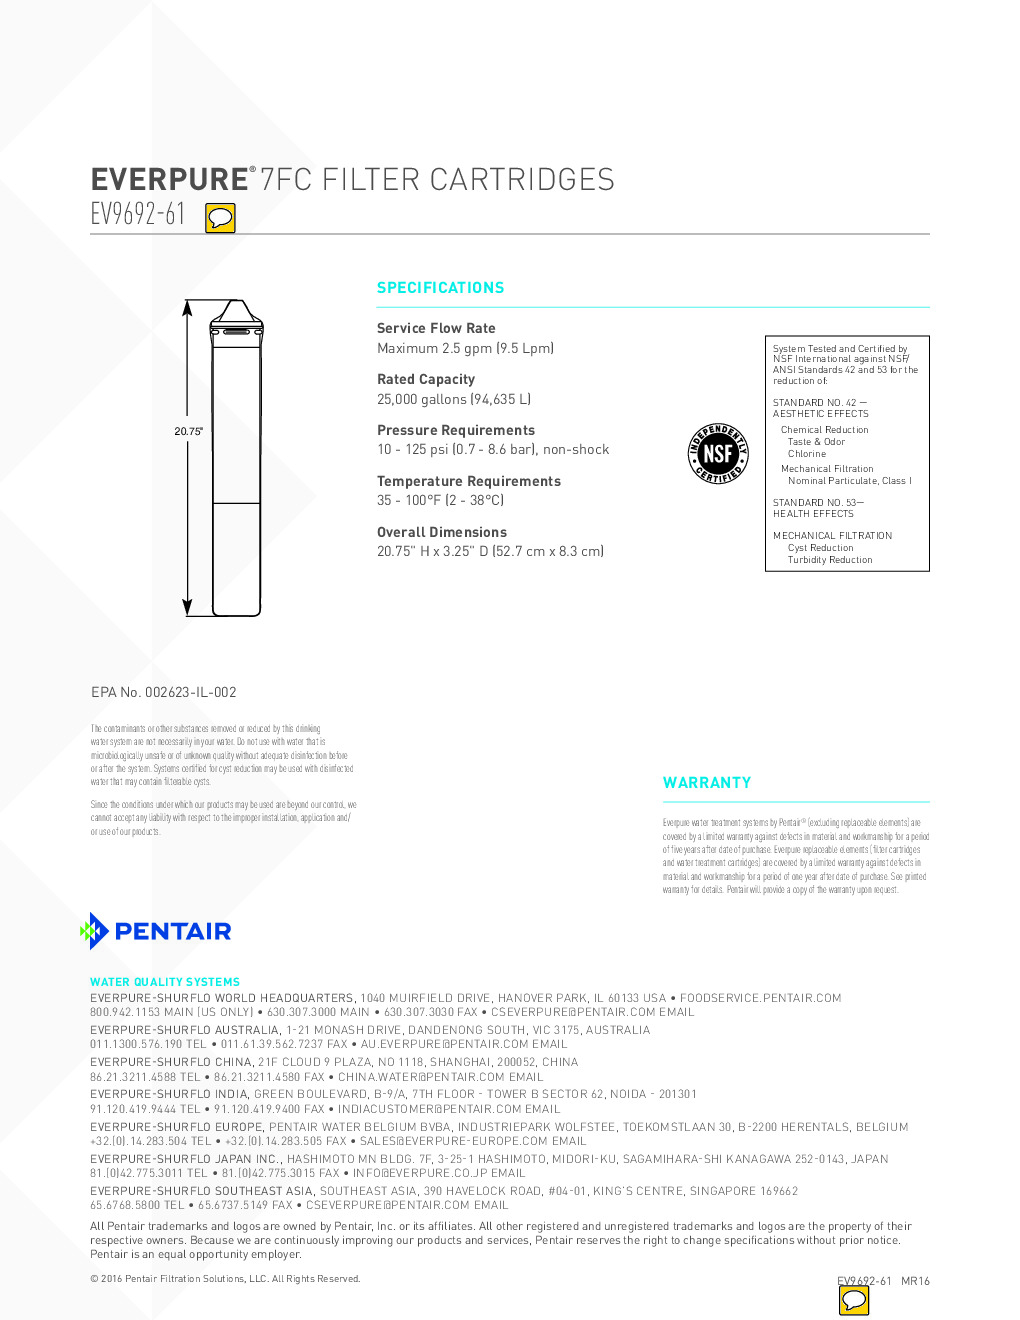 Everpure EV969261 Cartridge Water Filtration System